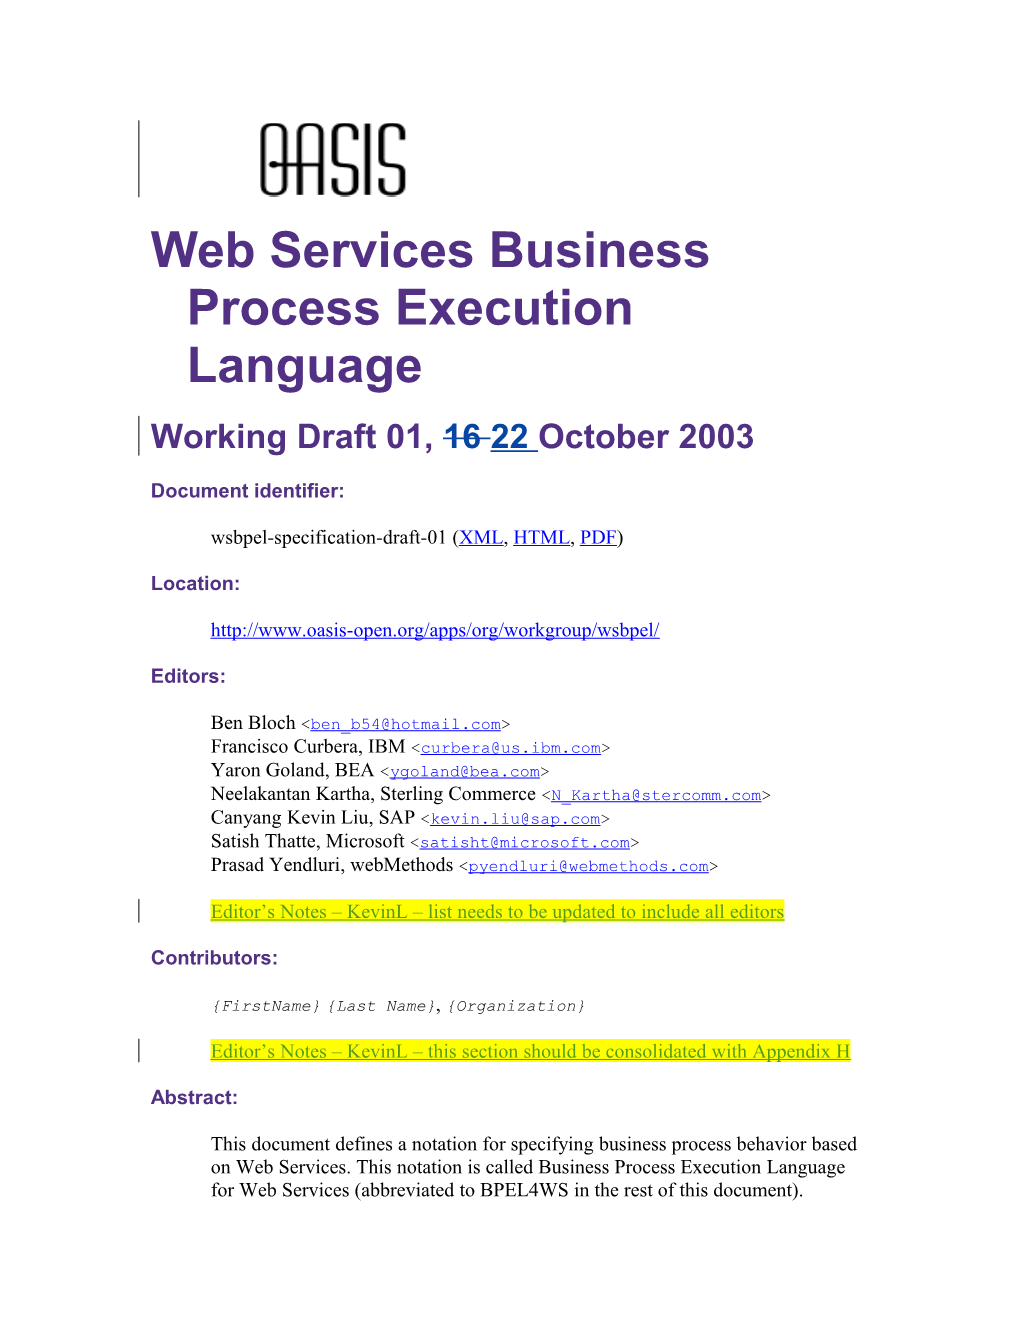 Web Services Business Process Execution Language